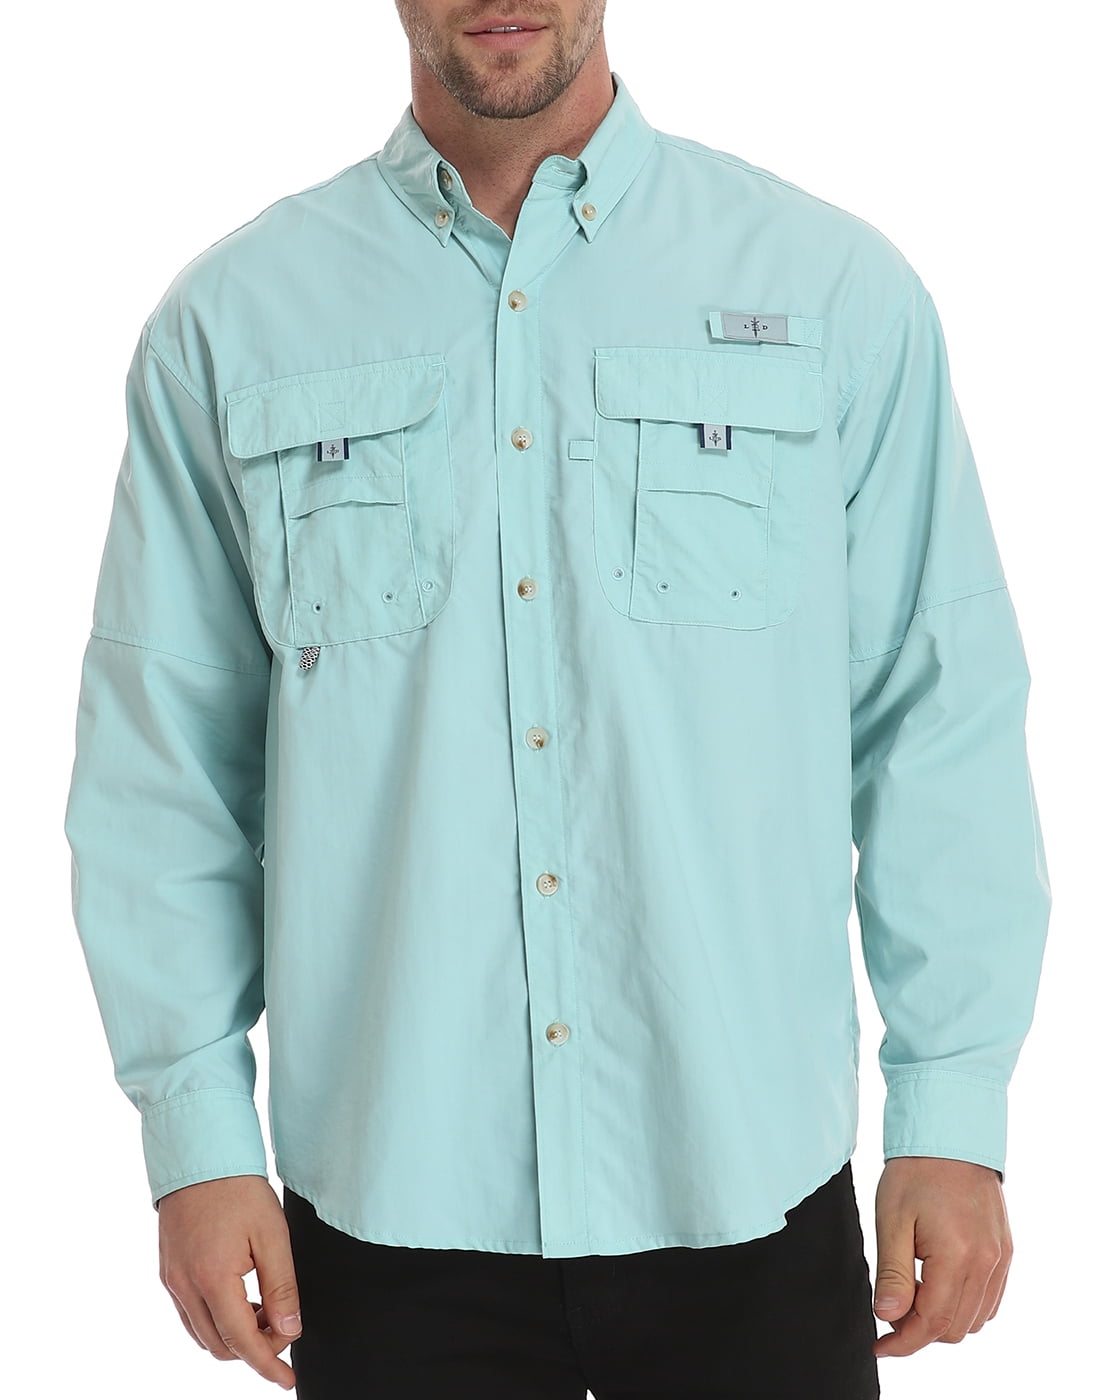 LRD Men's UPF 30 Long Sleeve Button Down Fishing Shirts Screamin' Eagle XL  